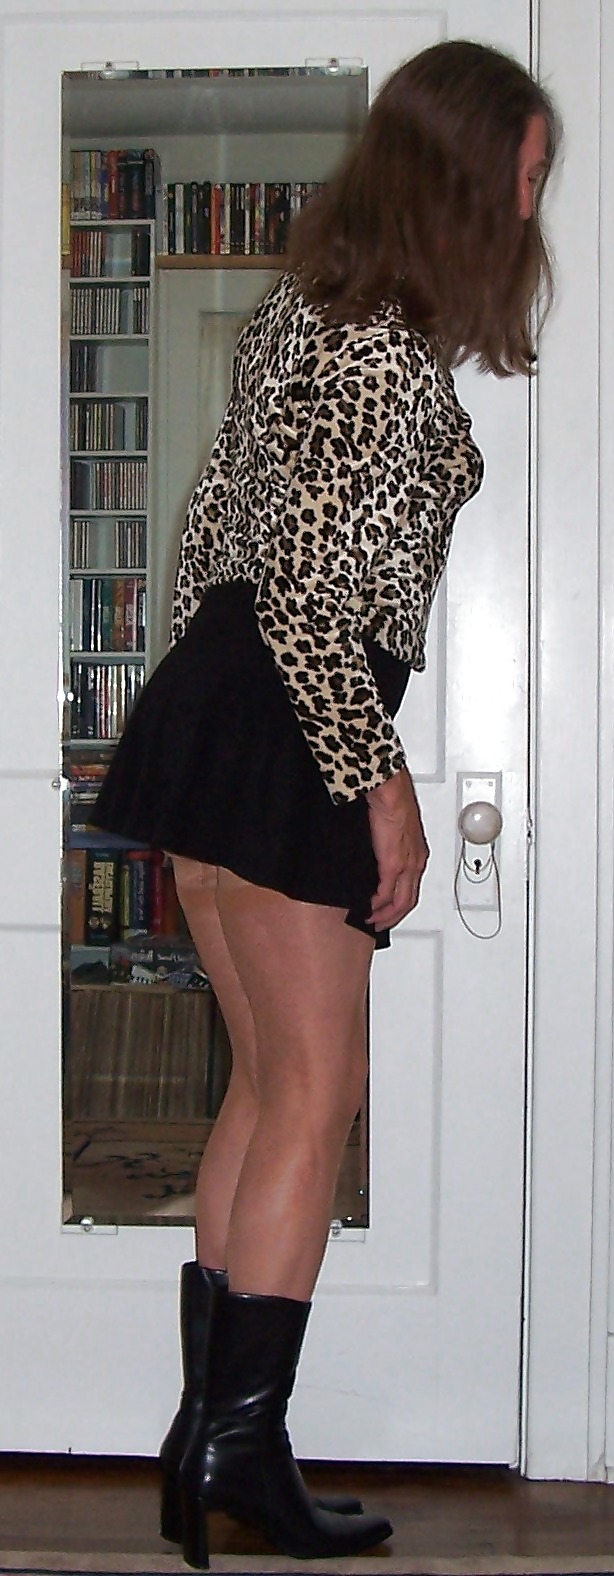 Crossdressing - ragazza leopardo
 #7202500